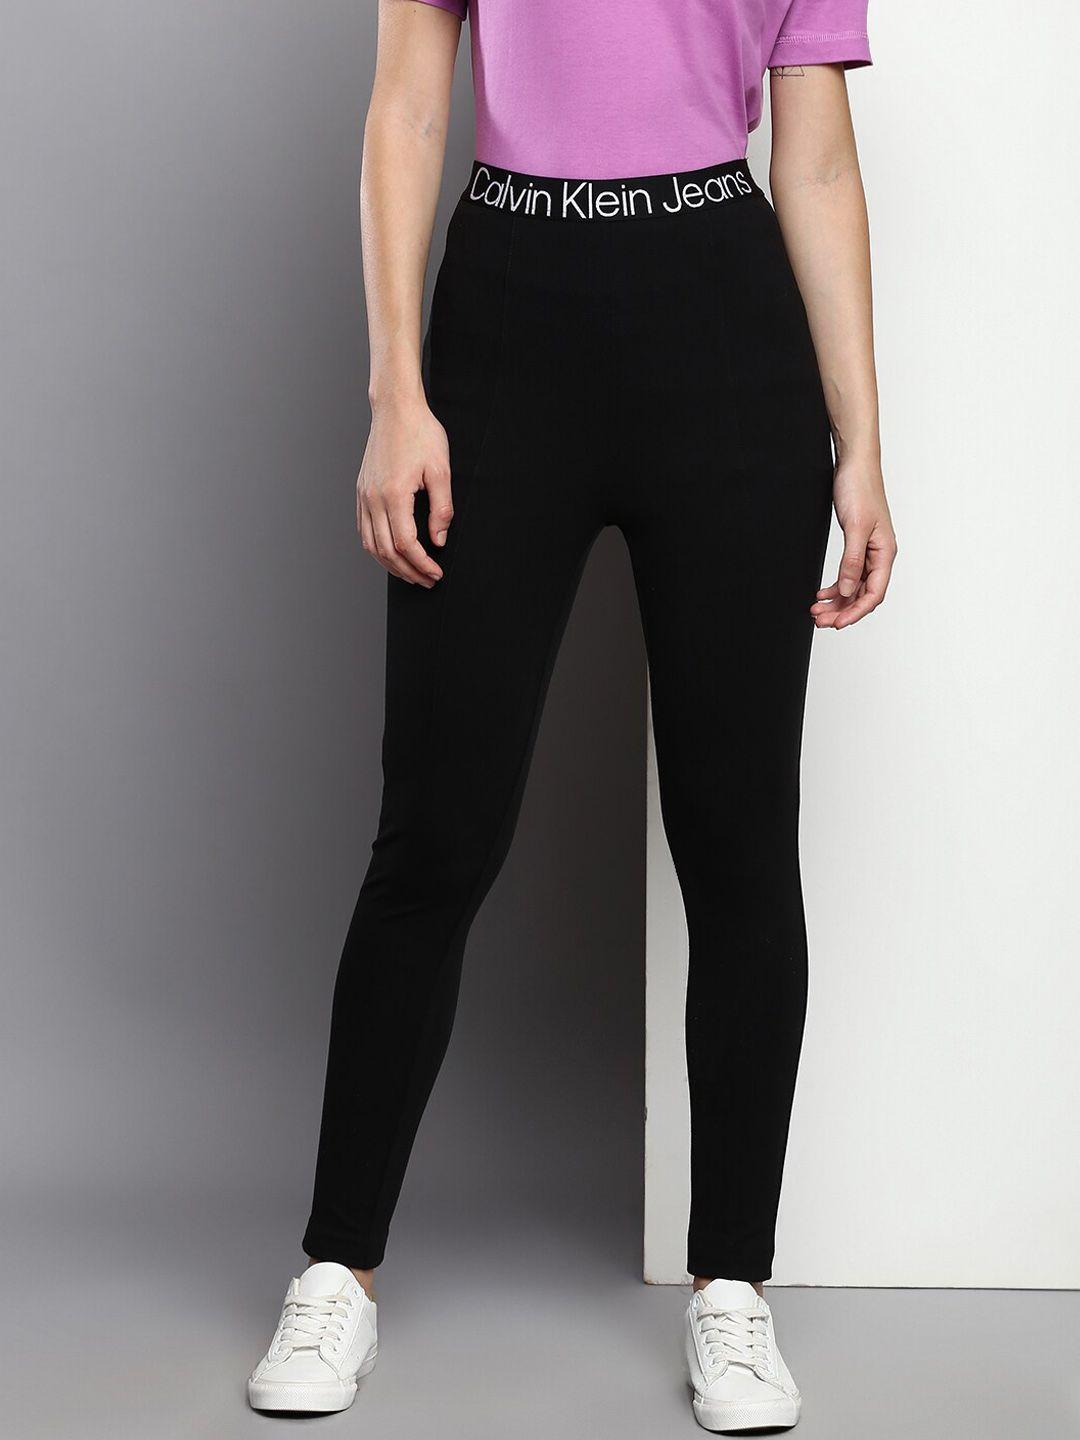 calvin klein jeans women black solid tights